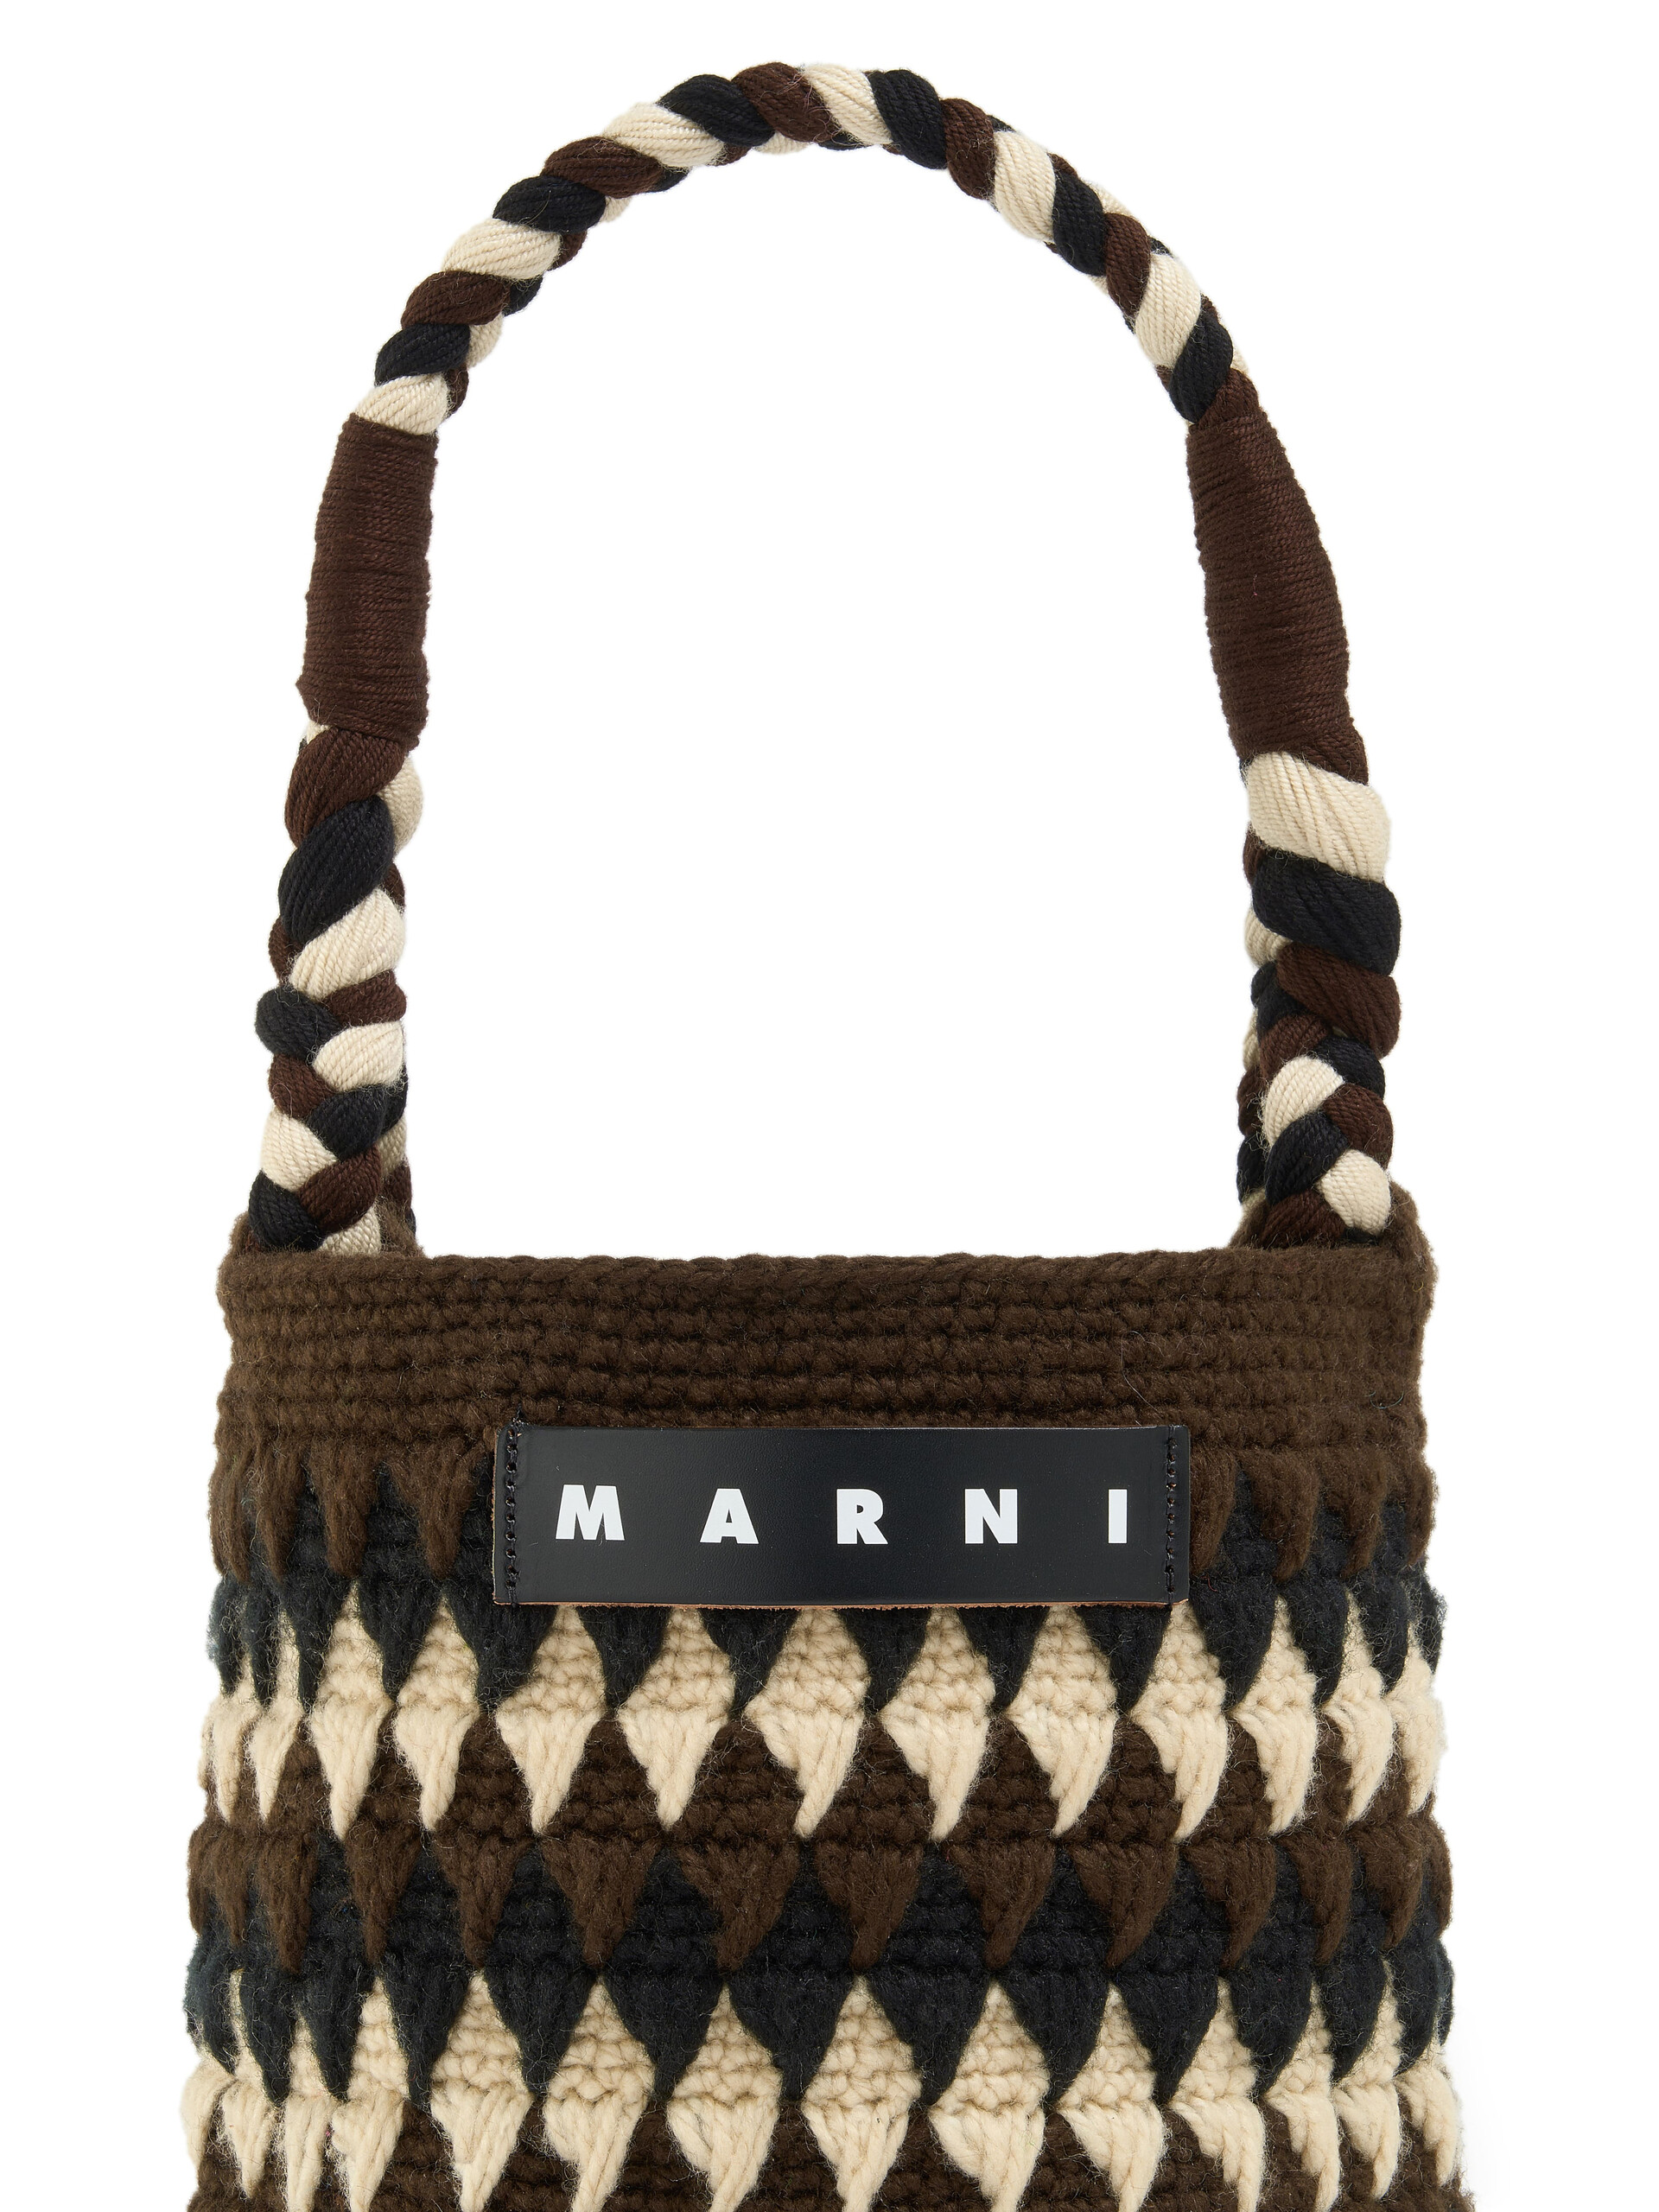 Orange And Blue Crochet Marni Market Chessboard Bag - Shopping Bags - Image 4